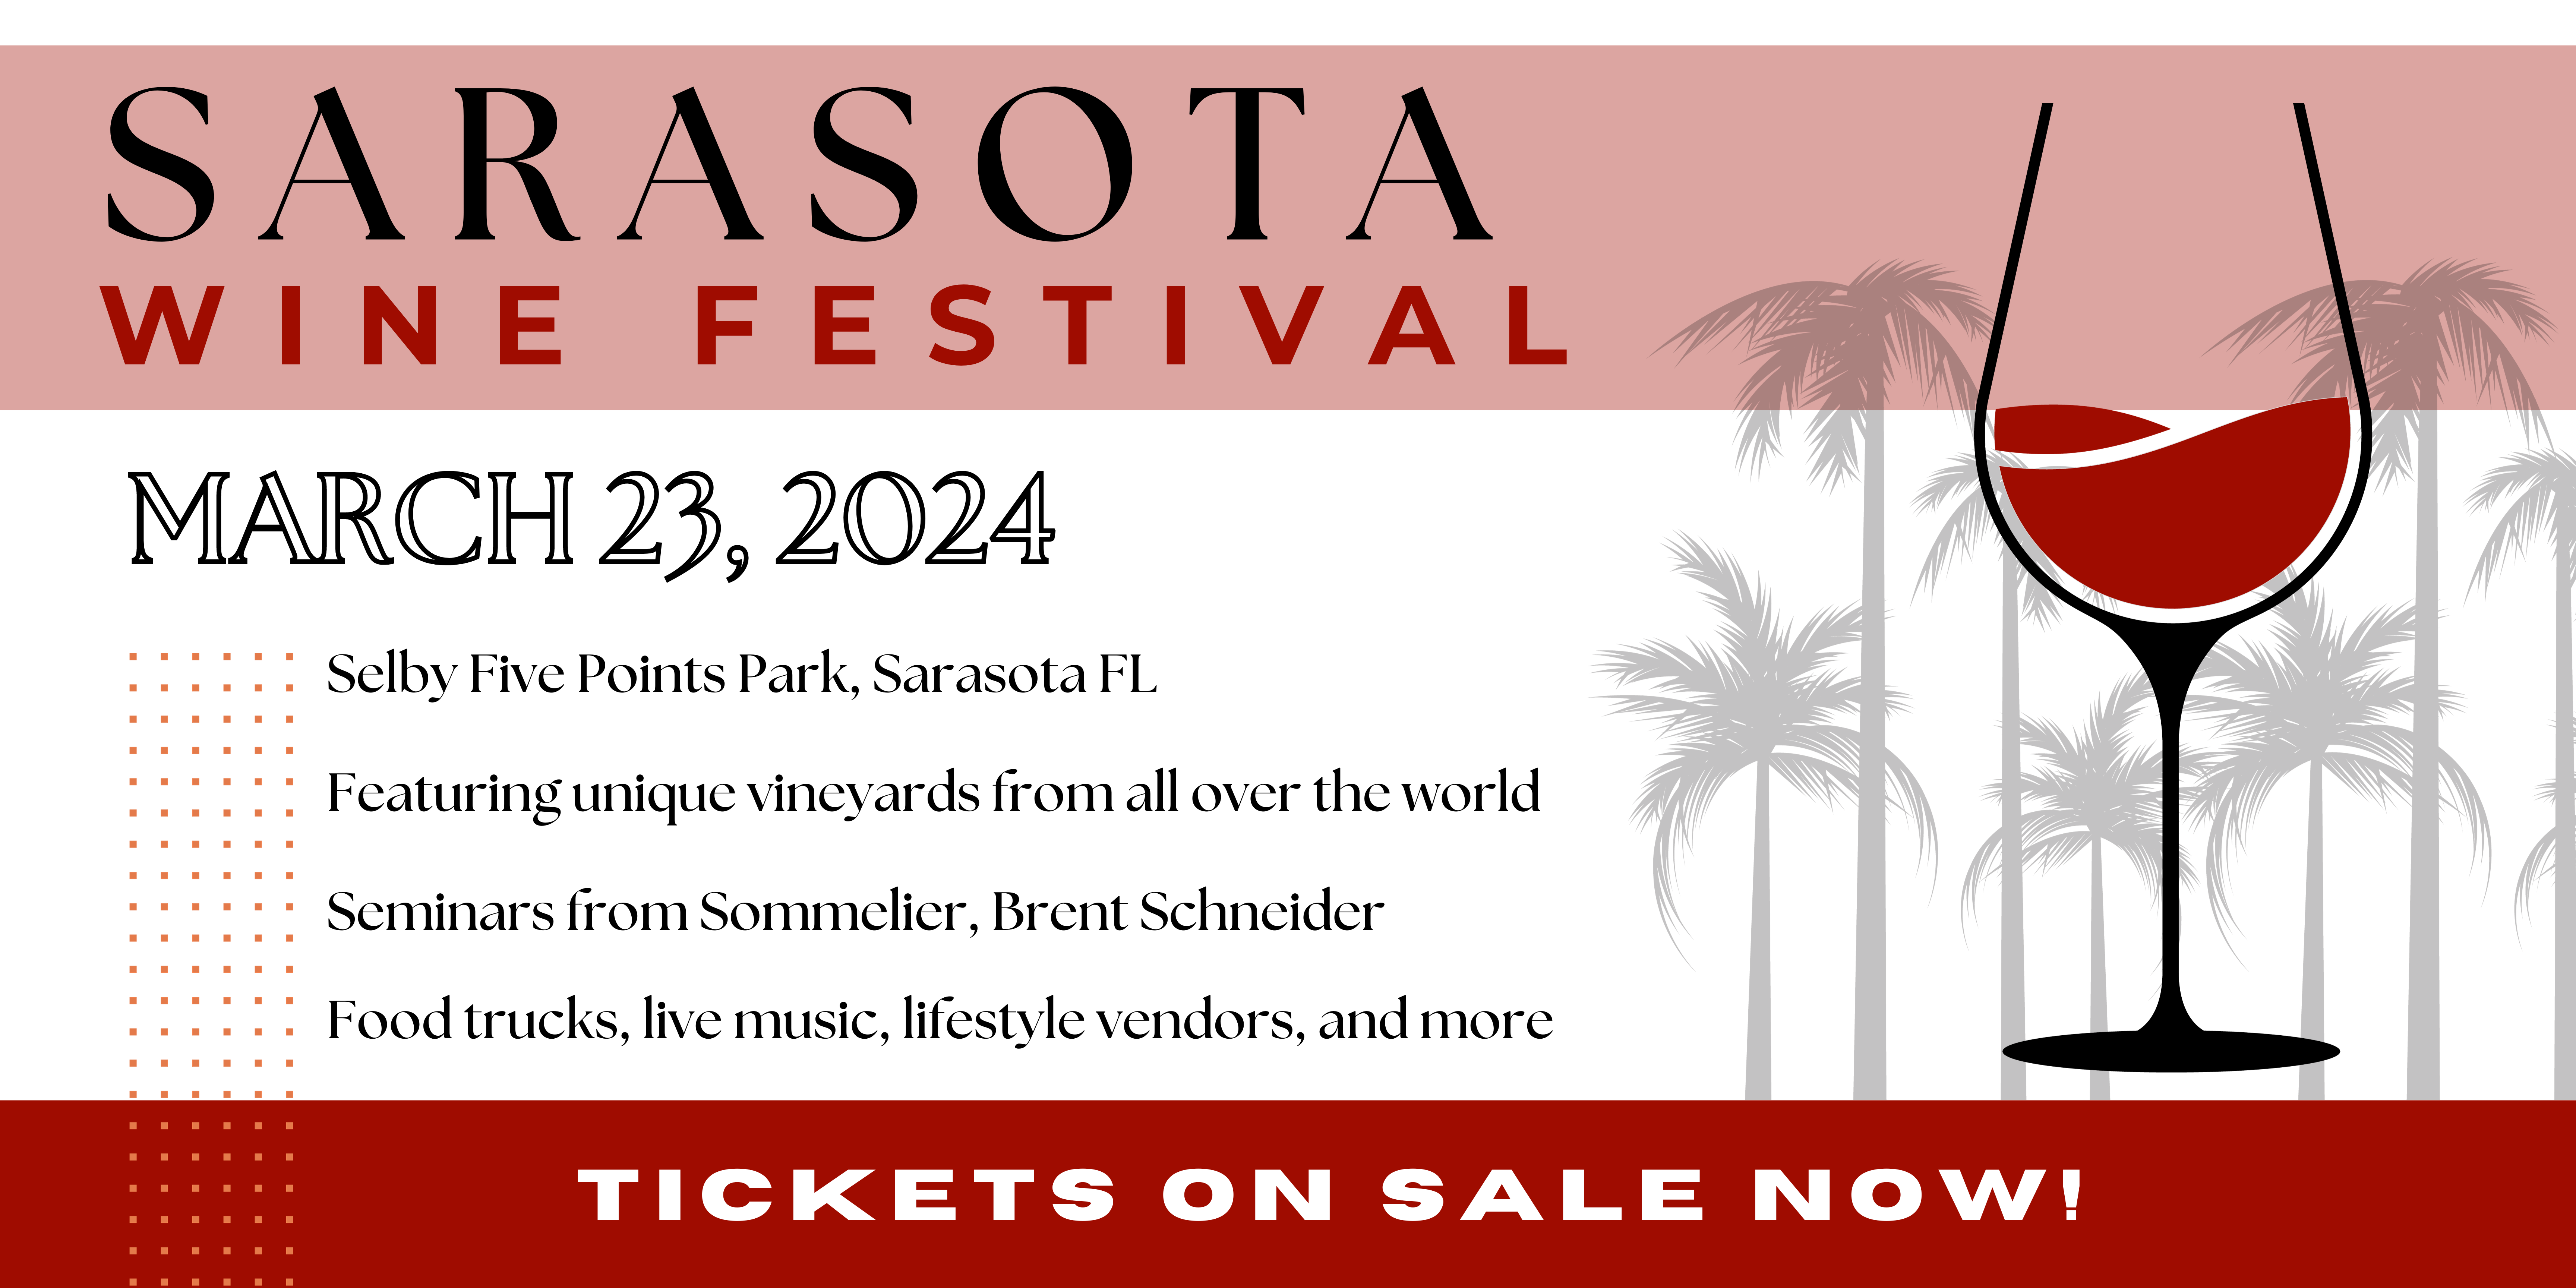 sarasota wine festival, downtown sarasota, selby five points park, wine tasting, live music, food trucks, wine glass drinking festival atmophere